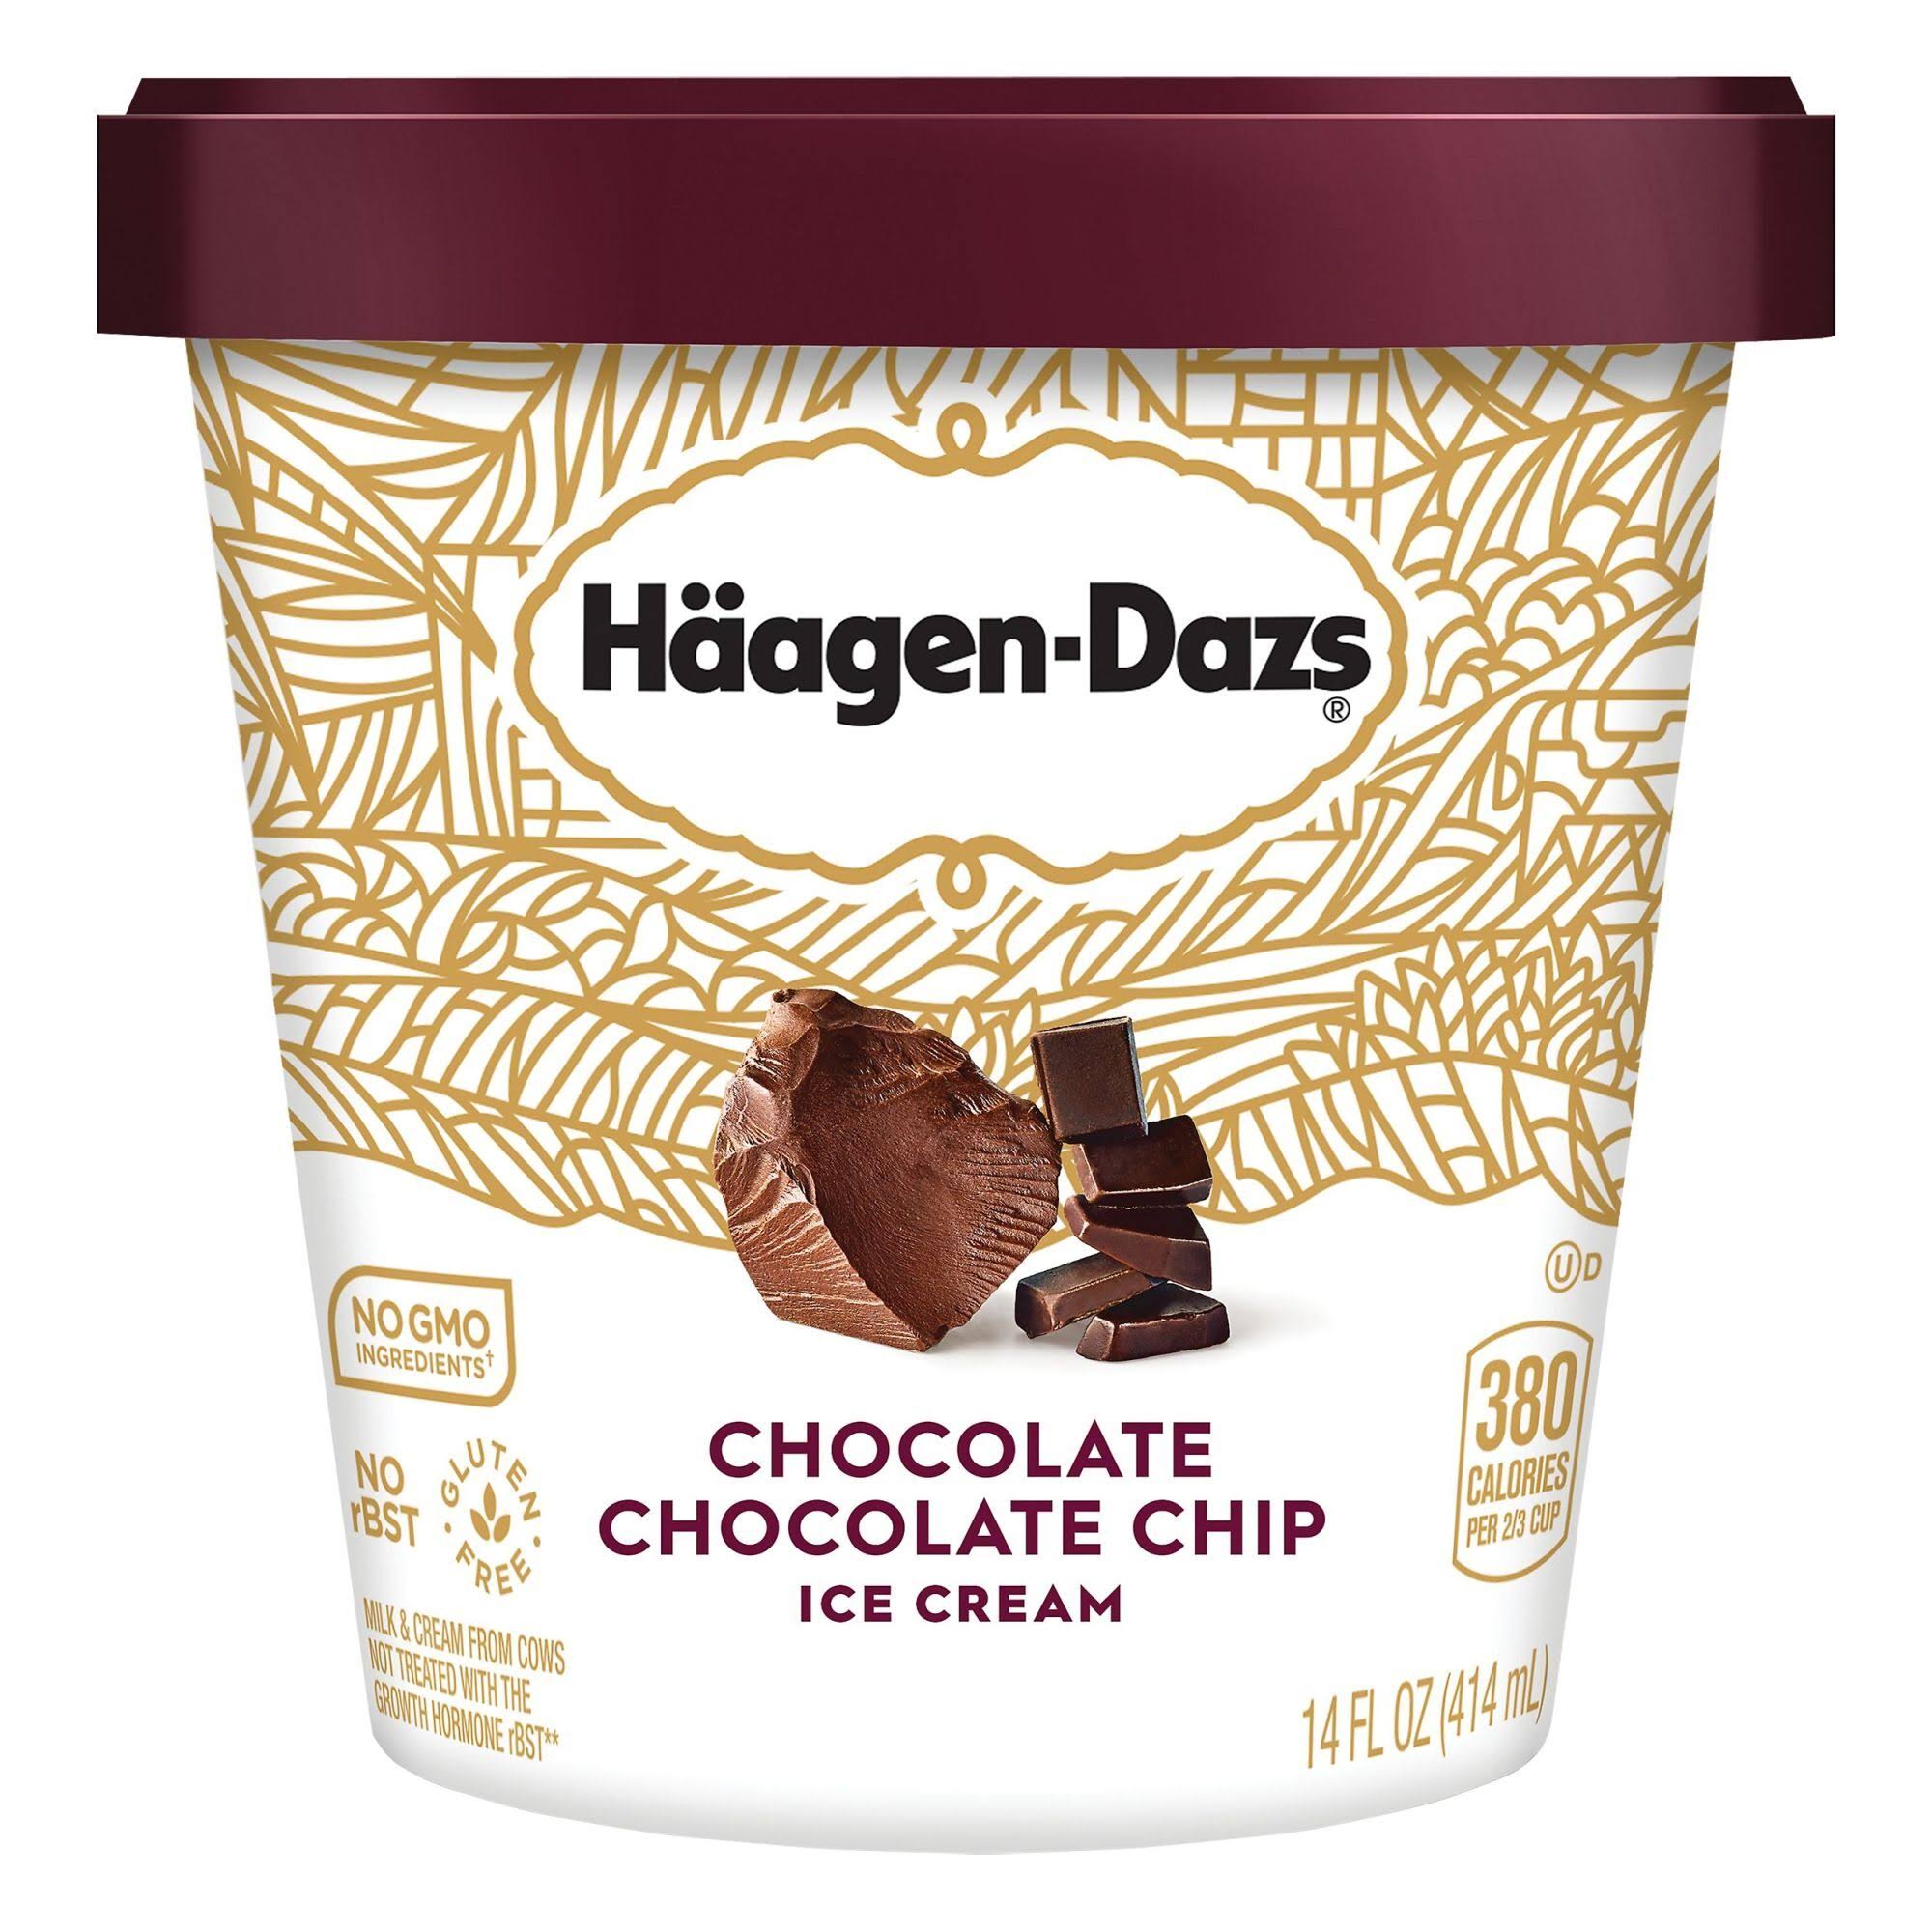 Haagen-Dazs Ice Cream - Chocolate Chocolate Chip